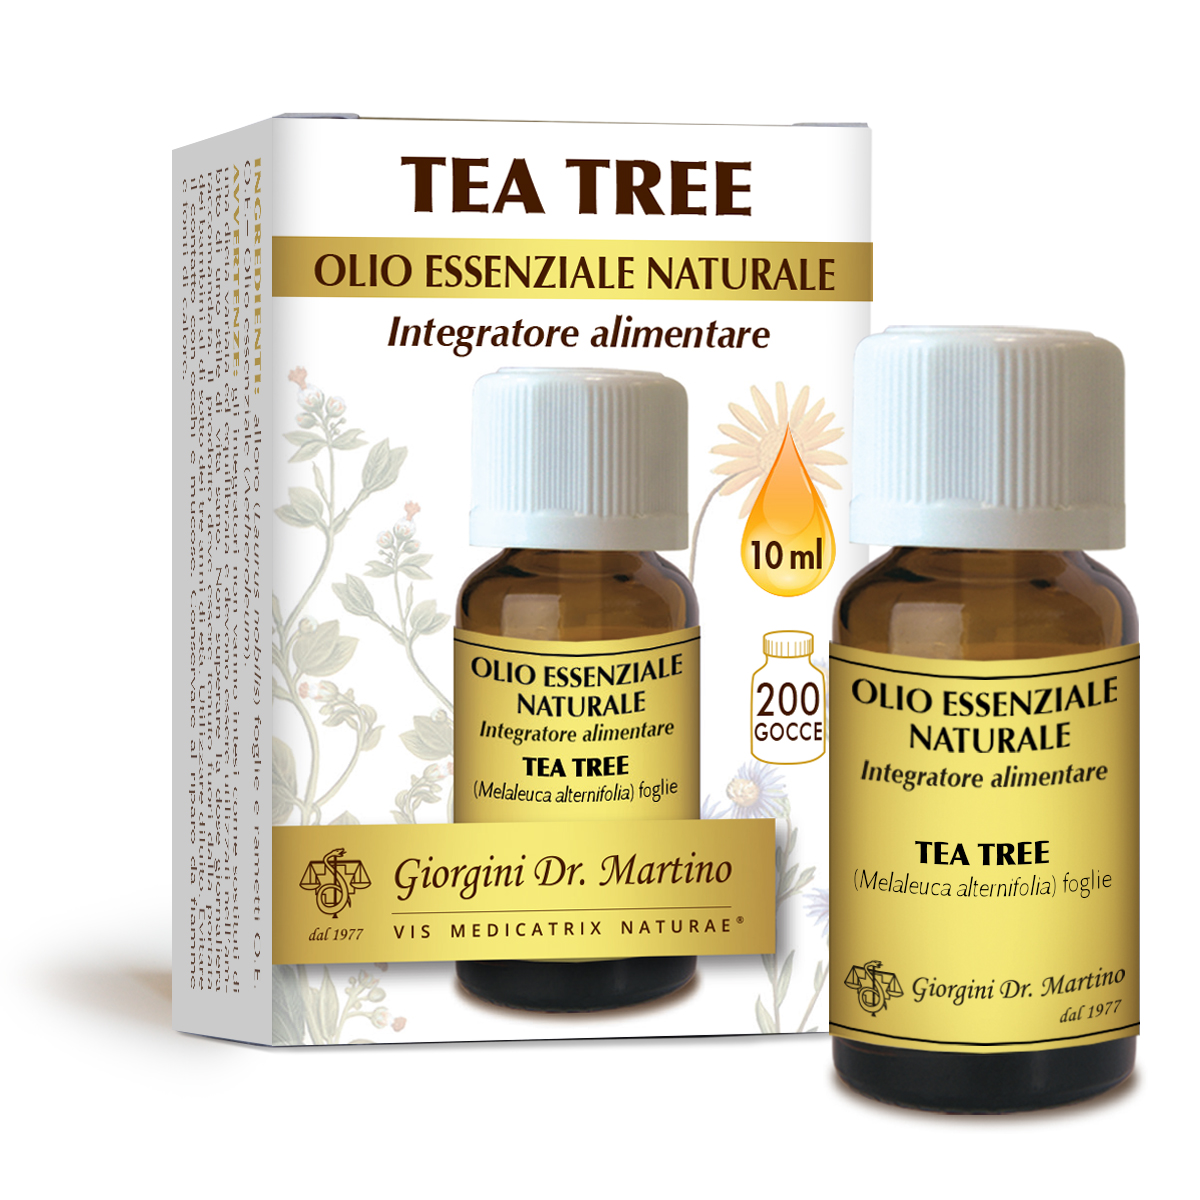 TEA TREE Olio essenziale naturale 10 ml